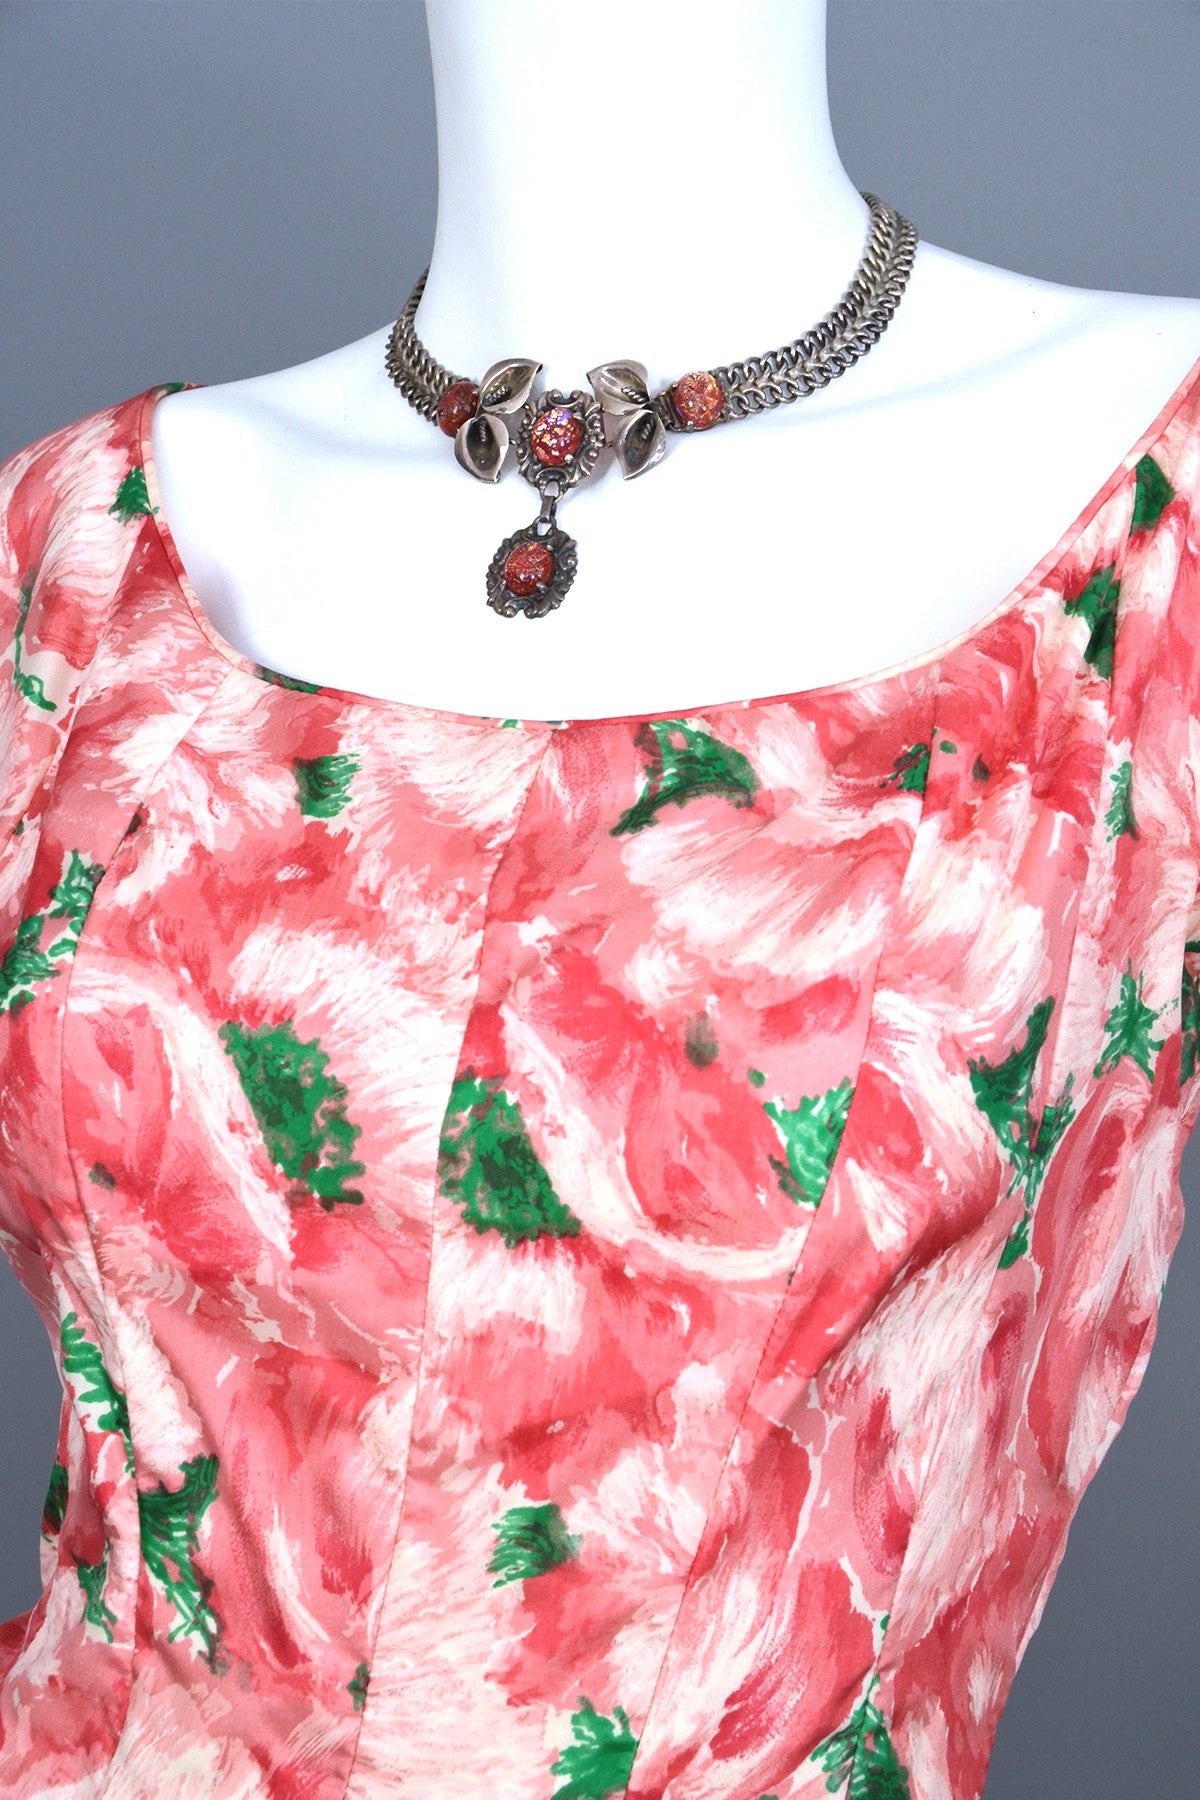 1950s Pink Retro Rose Print Silk Vintage Party Dress